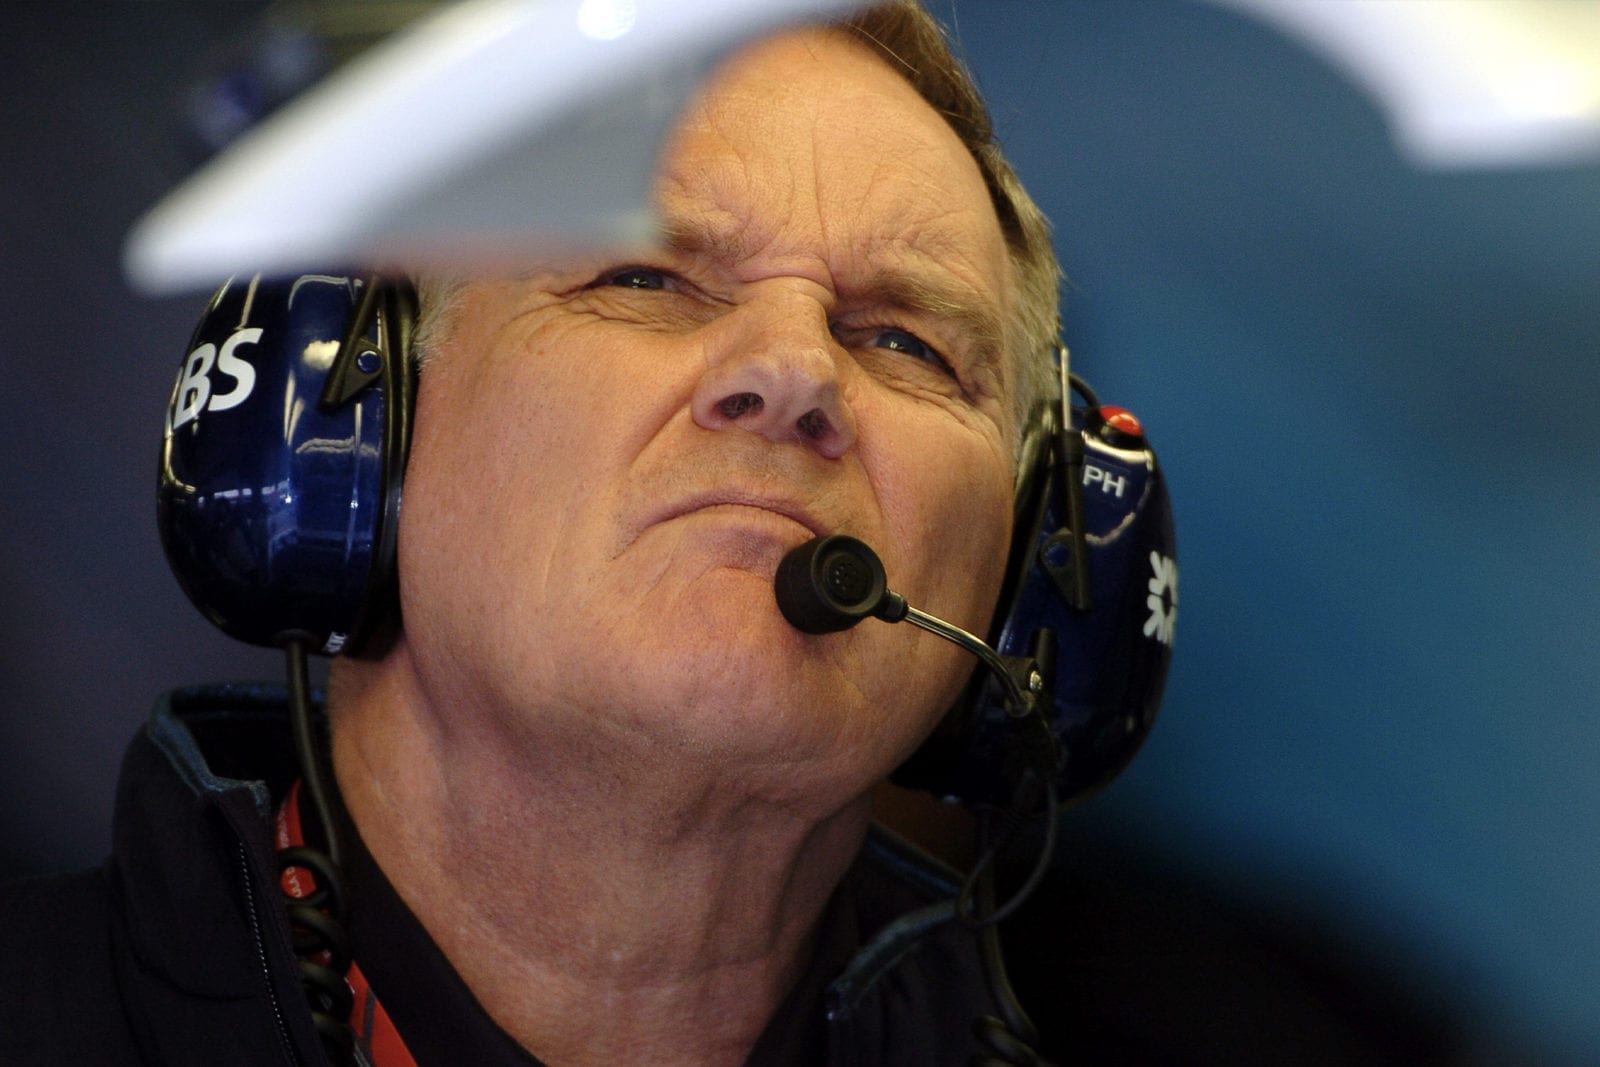 Patrick Head with headphones on at the 2006 Australian Grand Prix